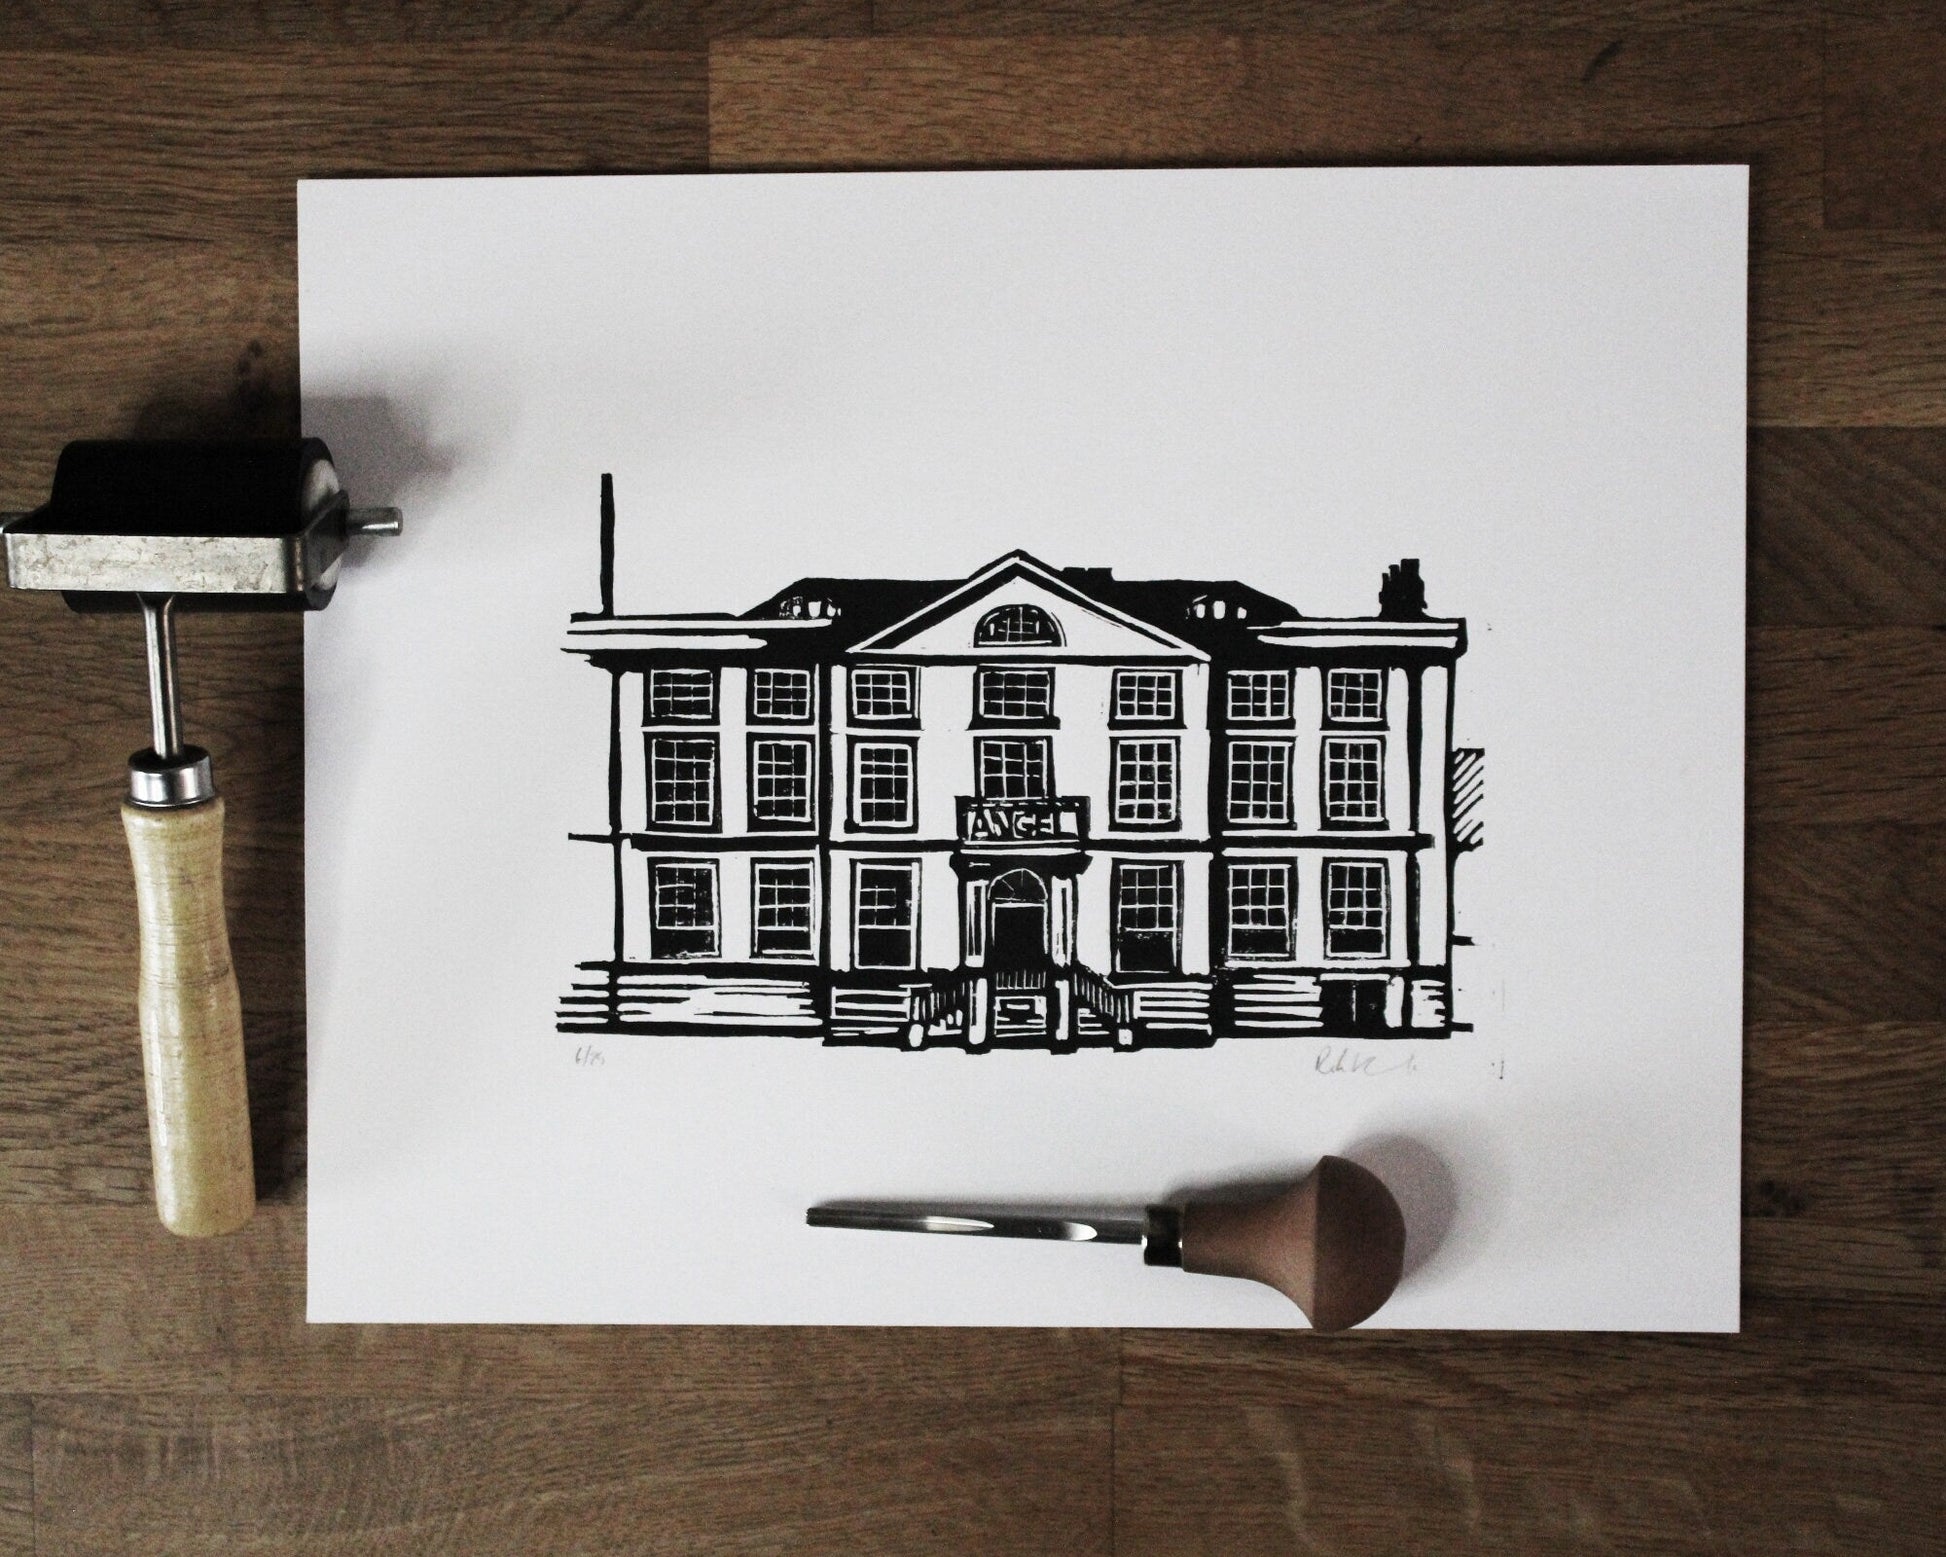 The Angel Hotel, Bury St Edmunds - Limited Edition Lino Print by The Rik Barwick Studio